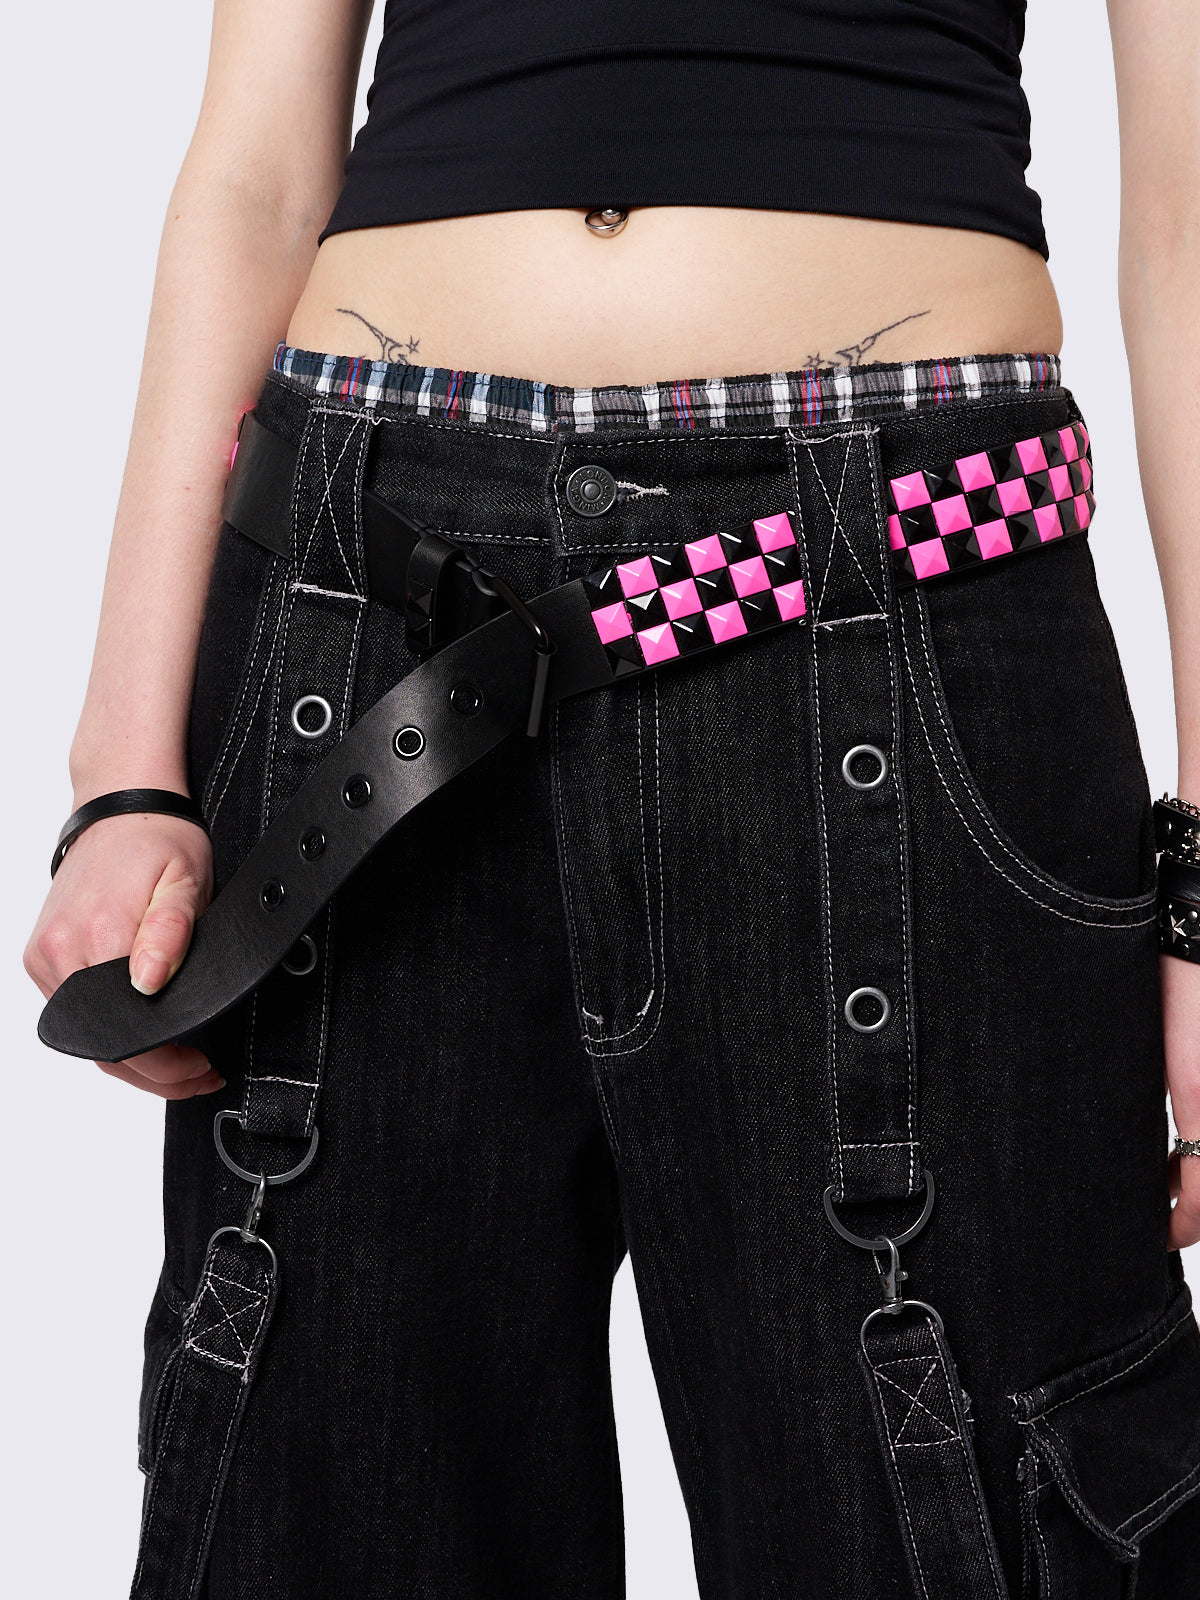 Checkerstrike Pink Black Studded Belt